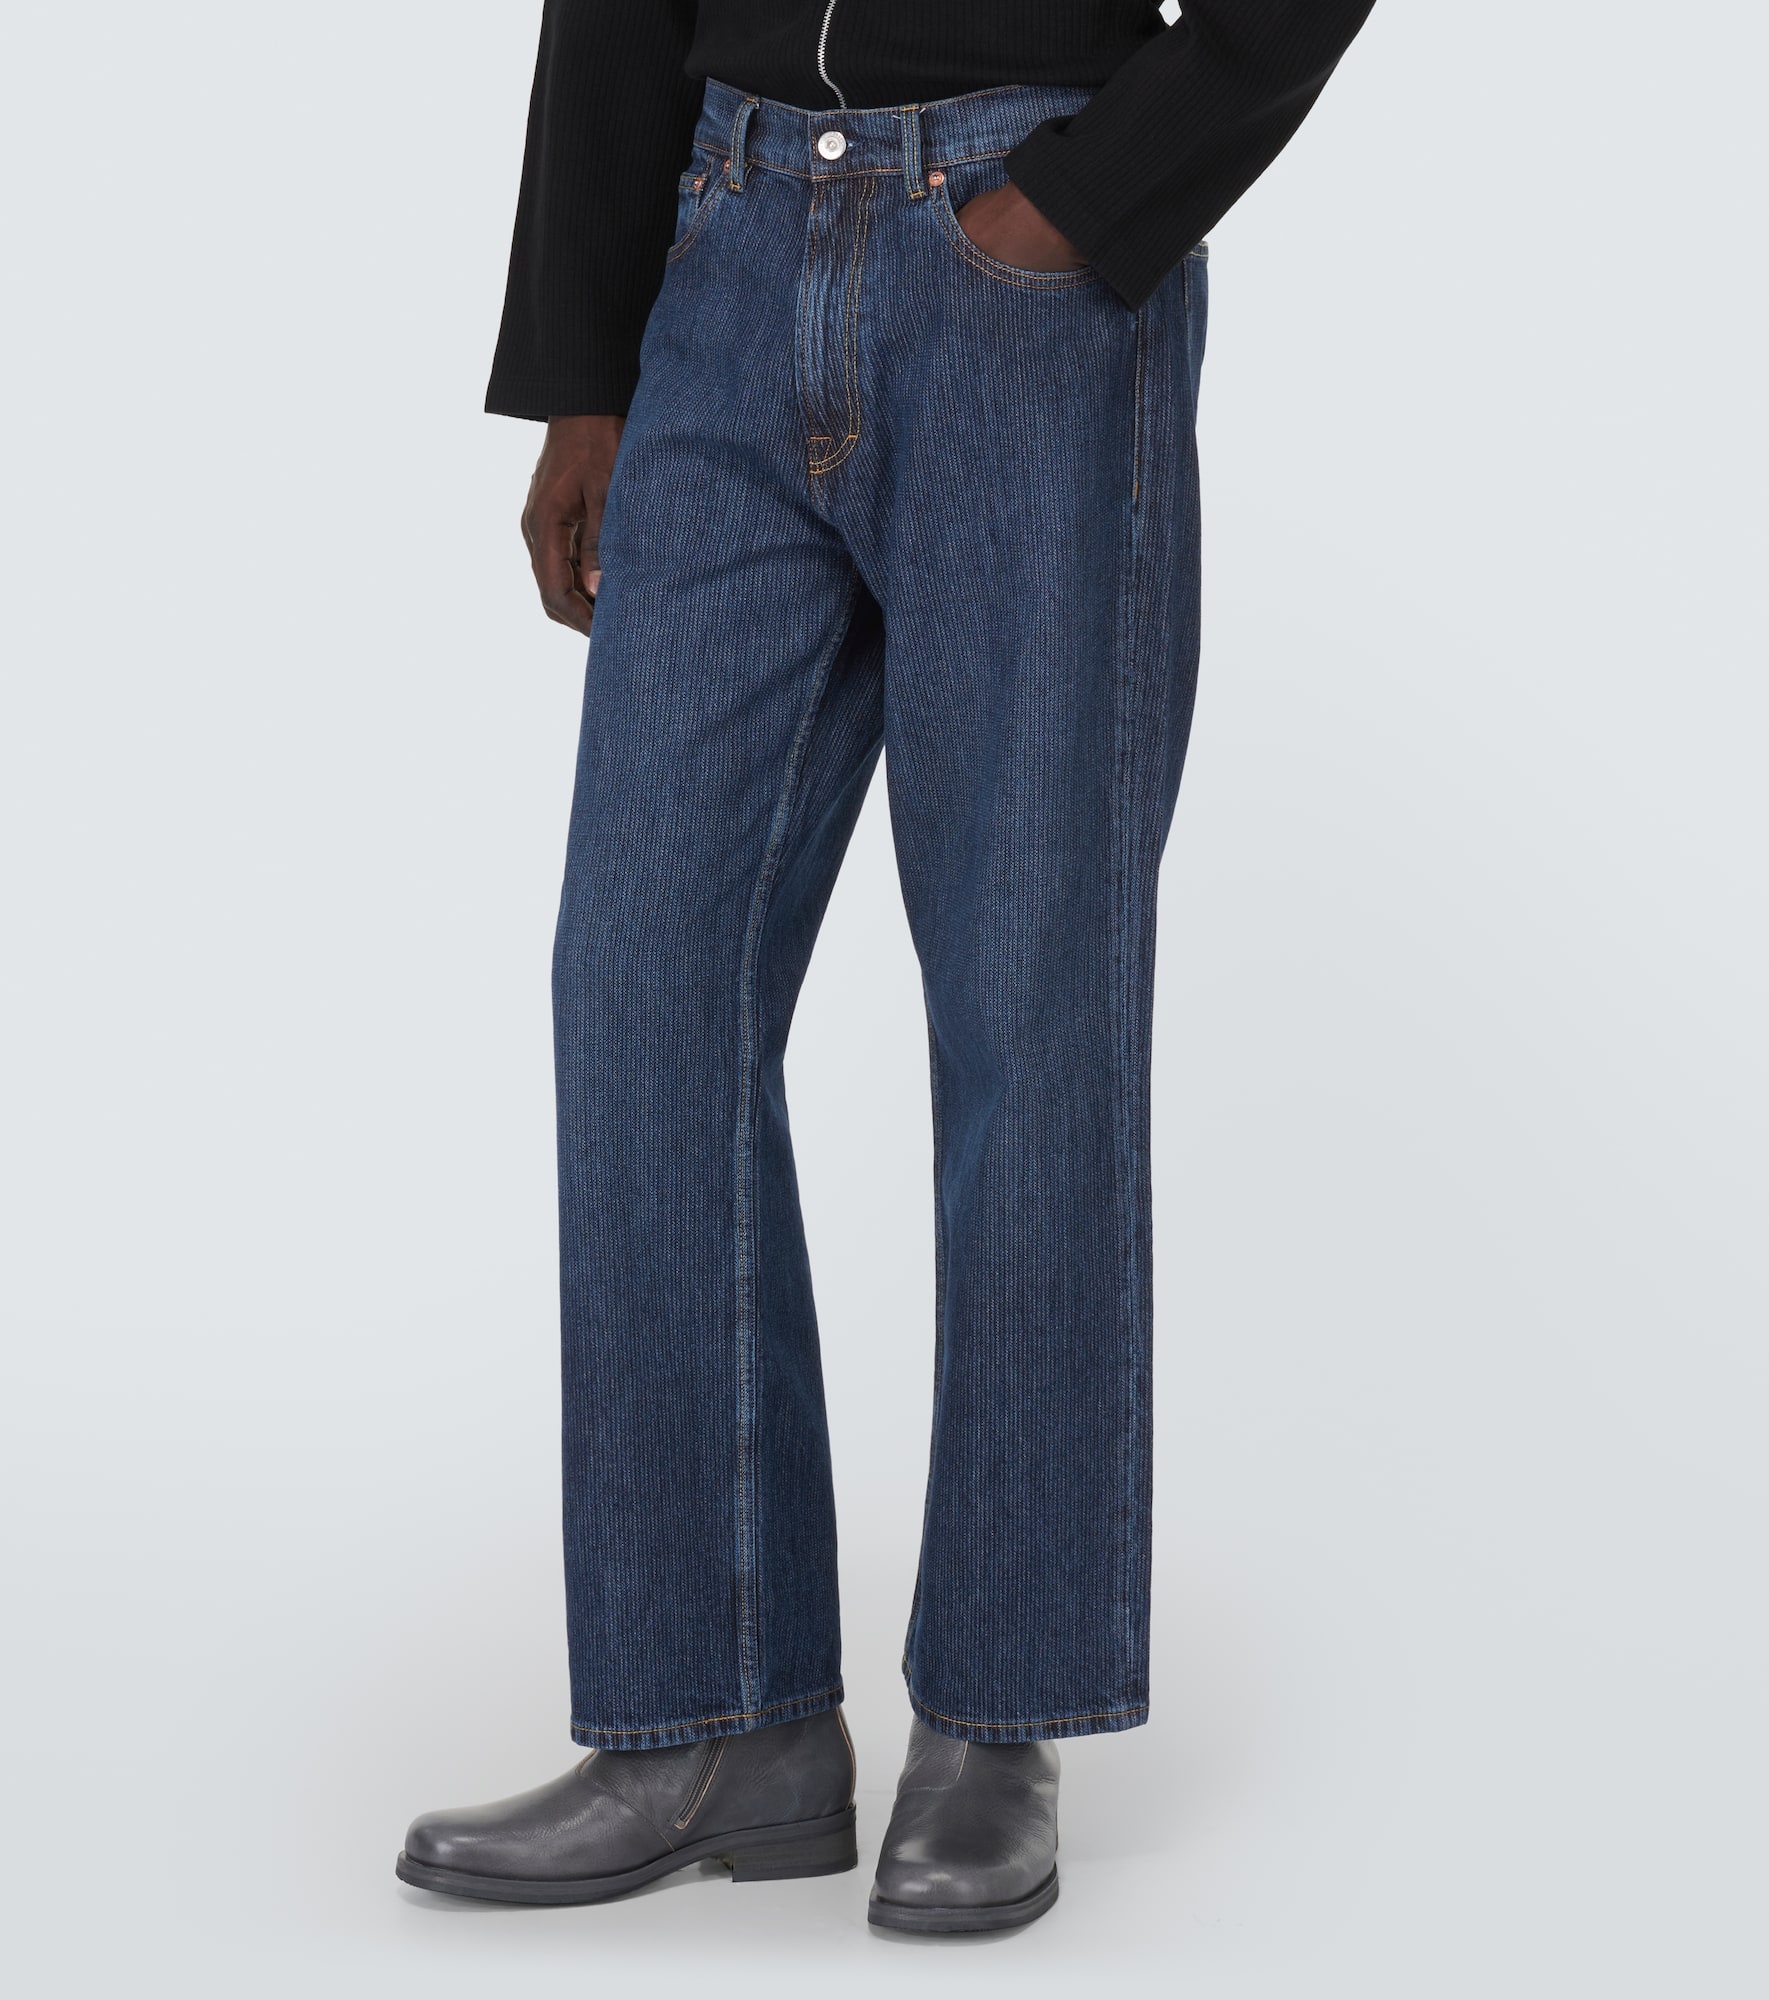 Third Cut straight jeans - 3